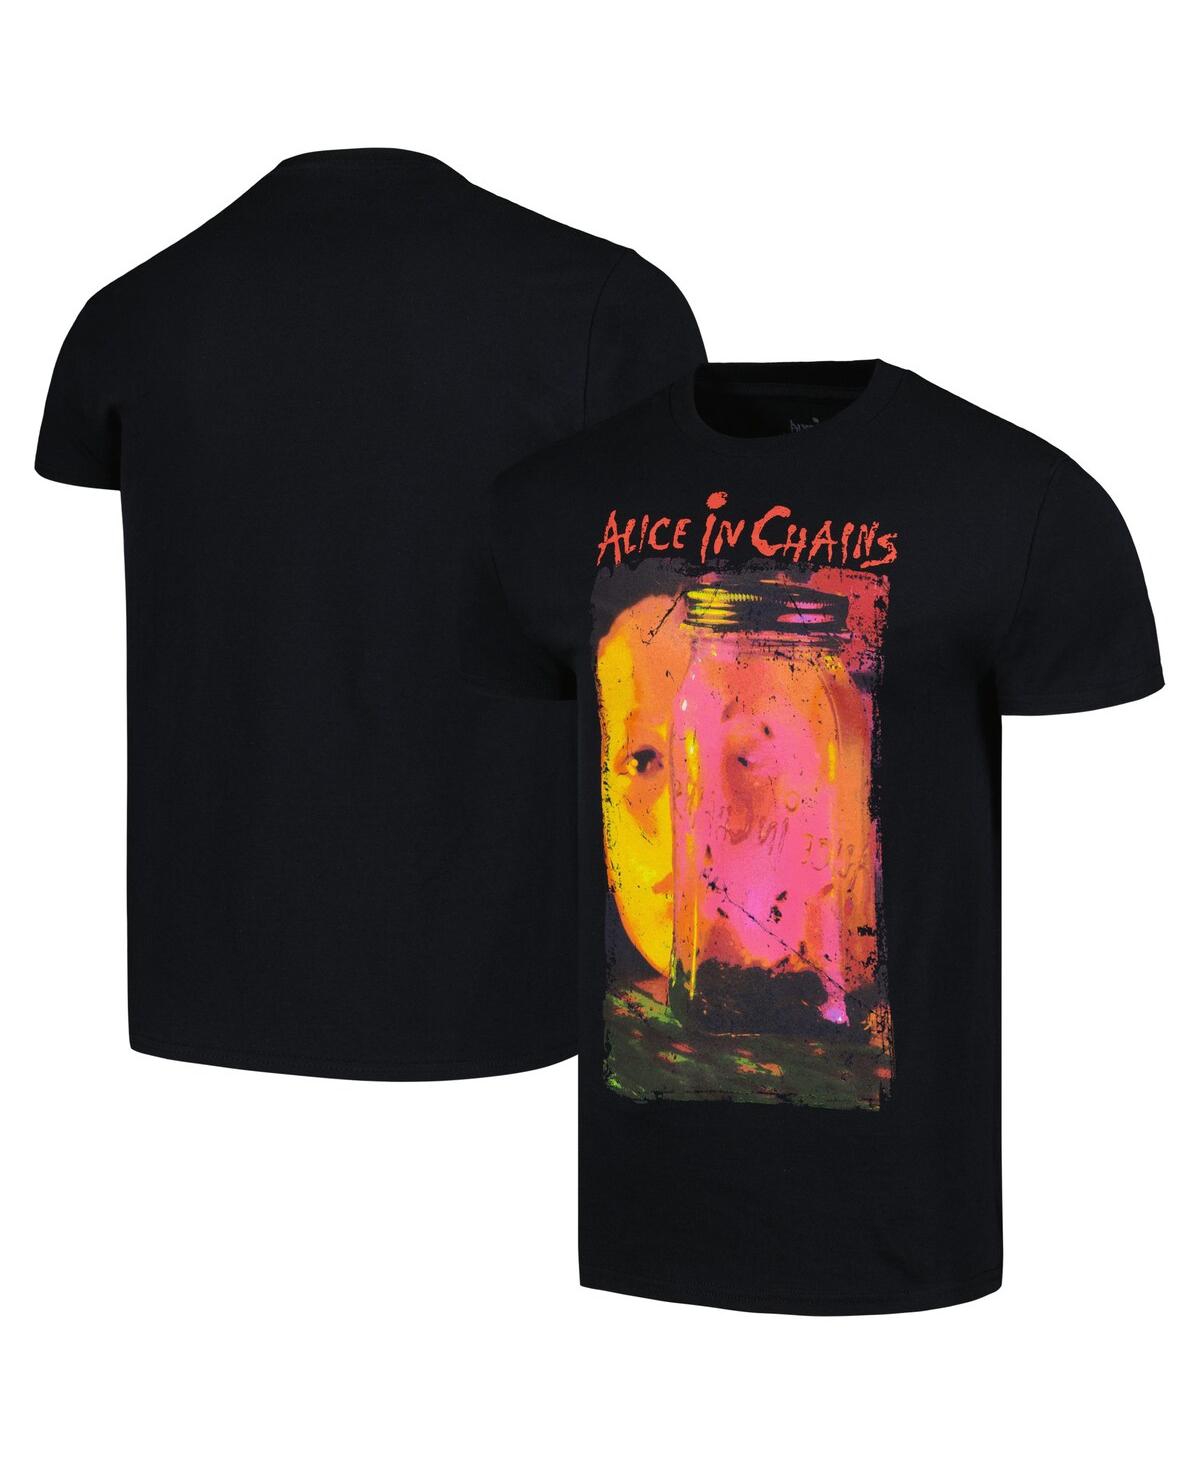 Men's Black Alice in Chains Jar of Flies T-shirt - Black